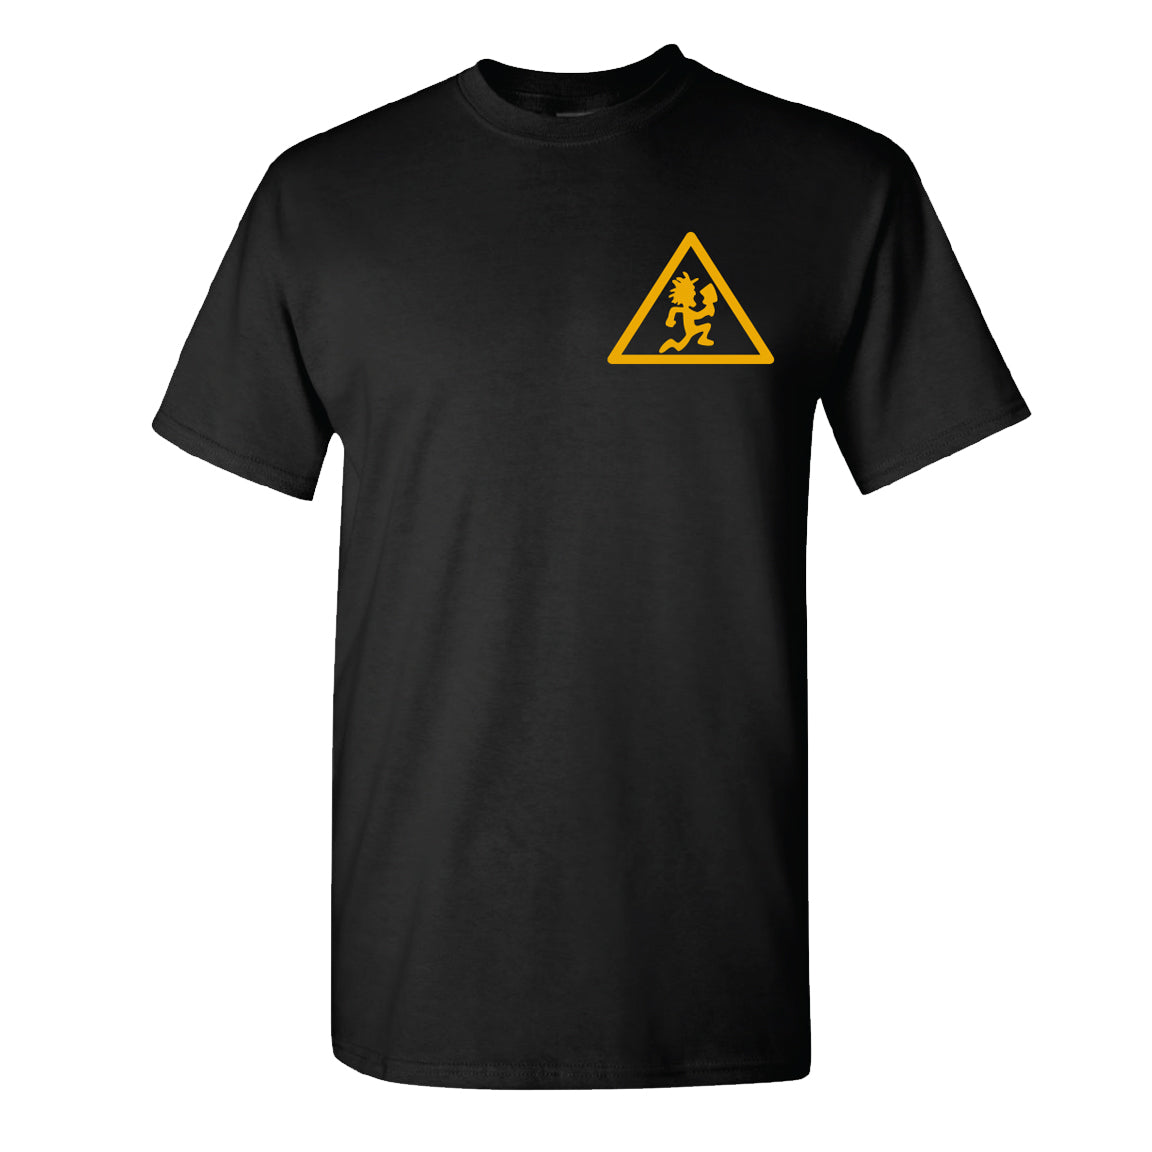 AREA 17 - Black T-Shirt